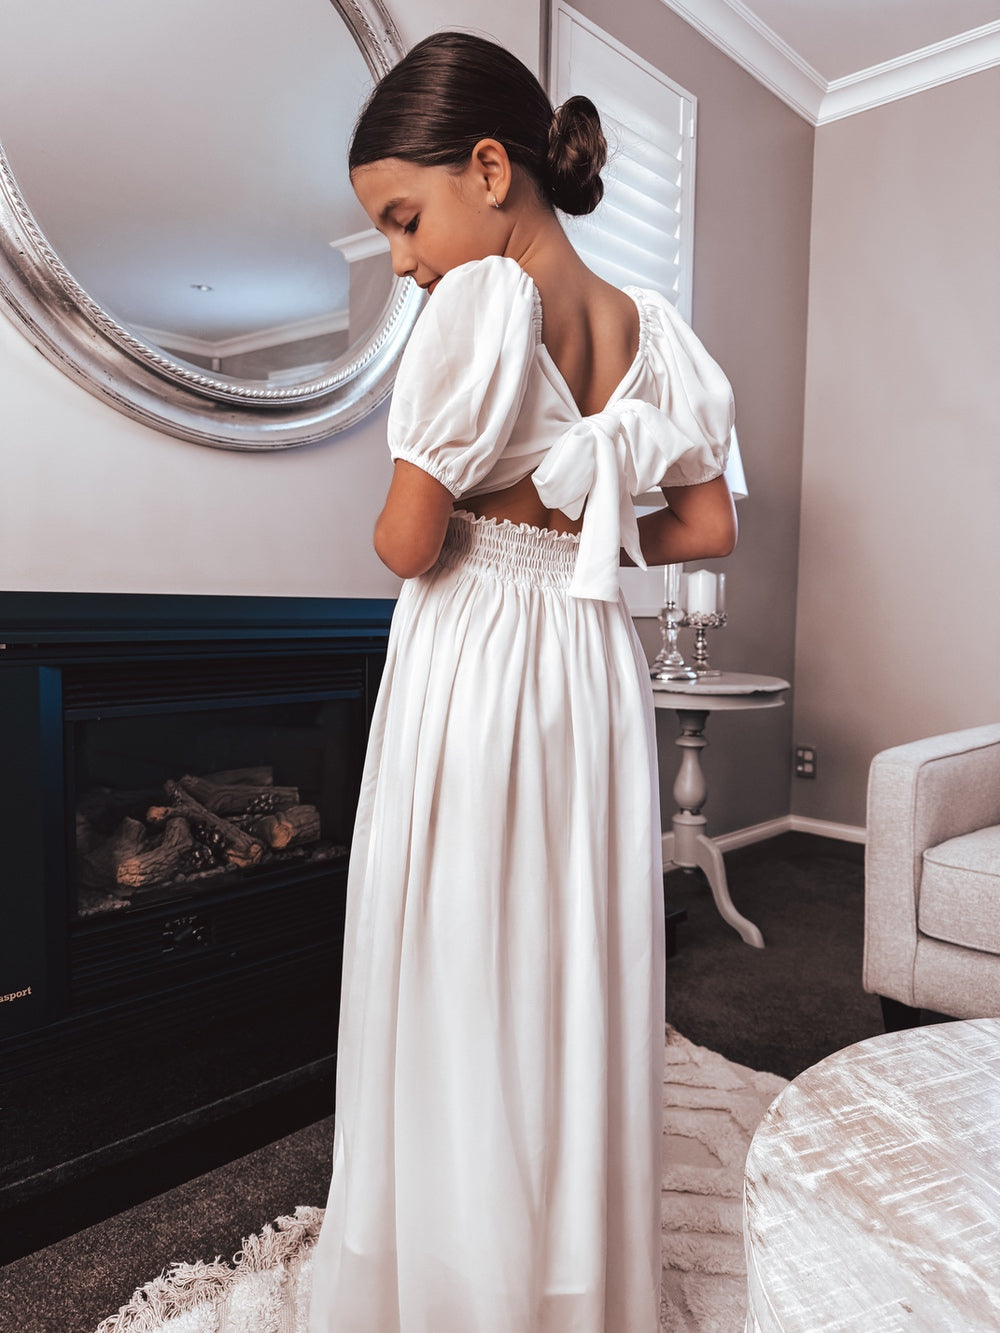 Emilia Girls White Dress - Tween Girls Dresses